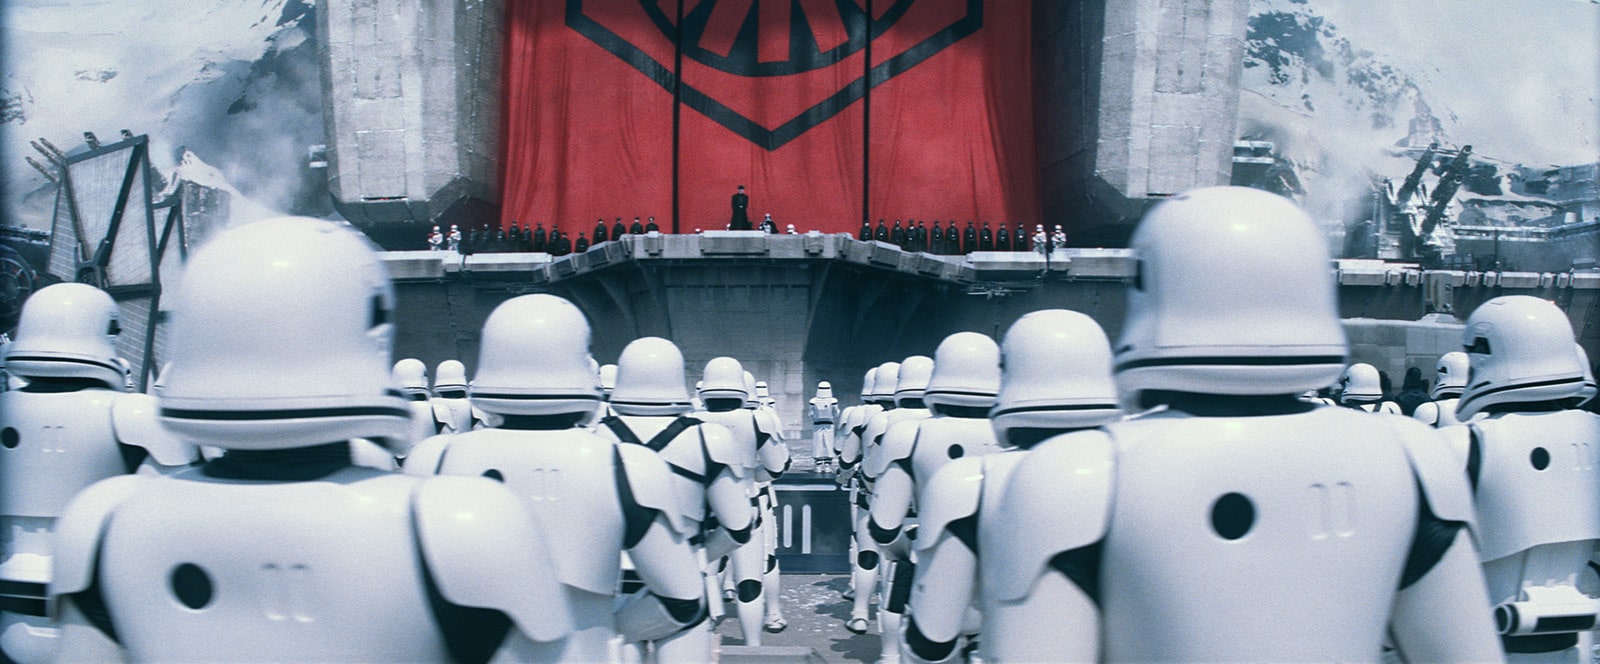 Star Wars: The Force Awakens (Photo Walt Disney / Lucasfilms)